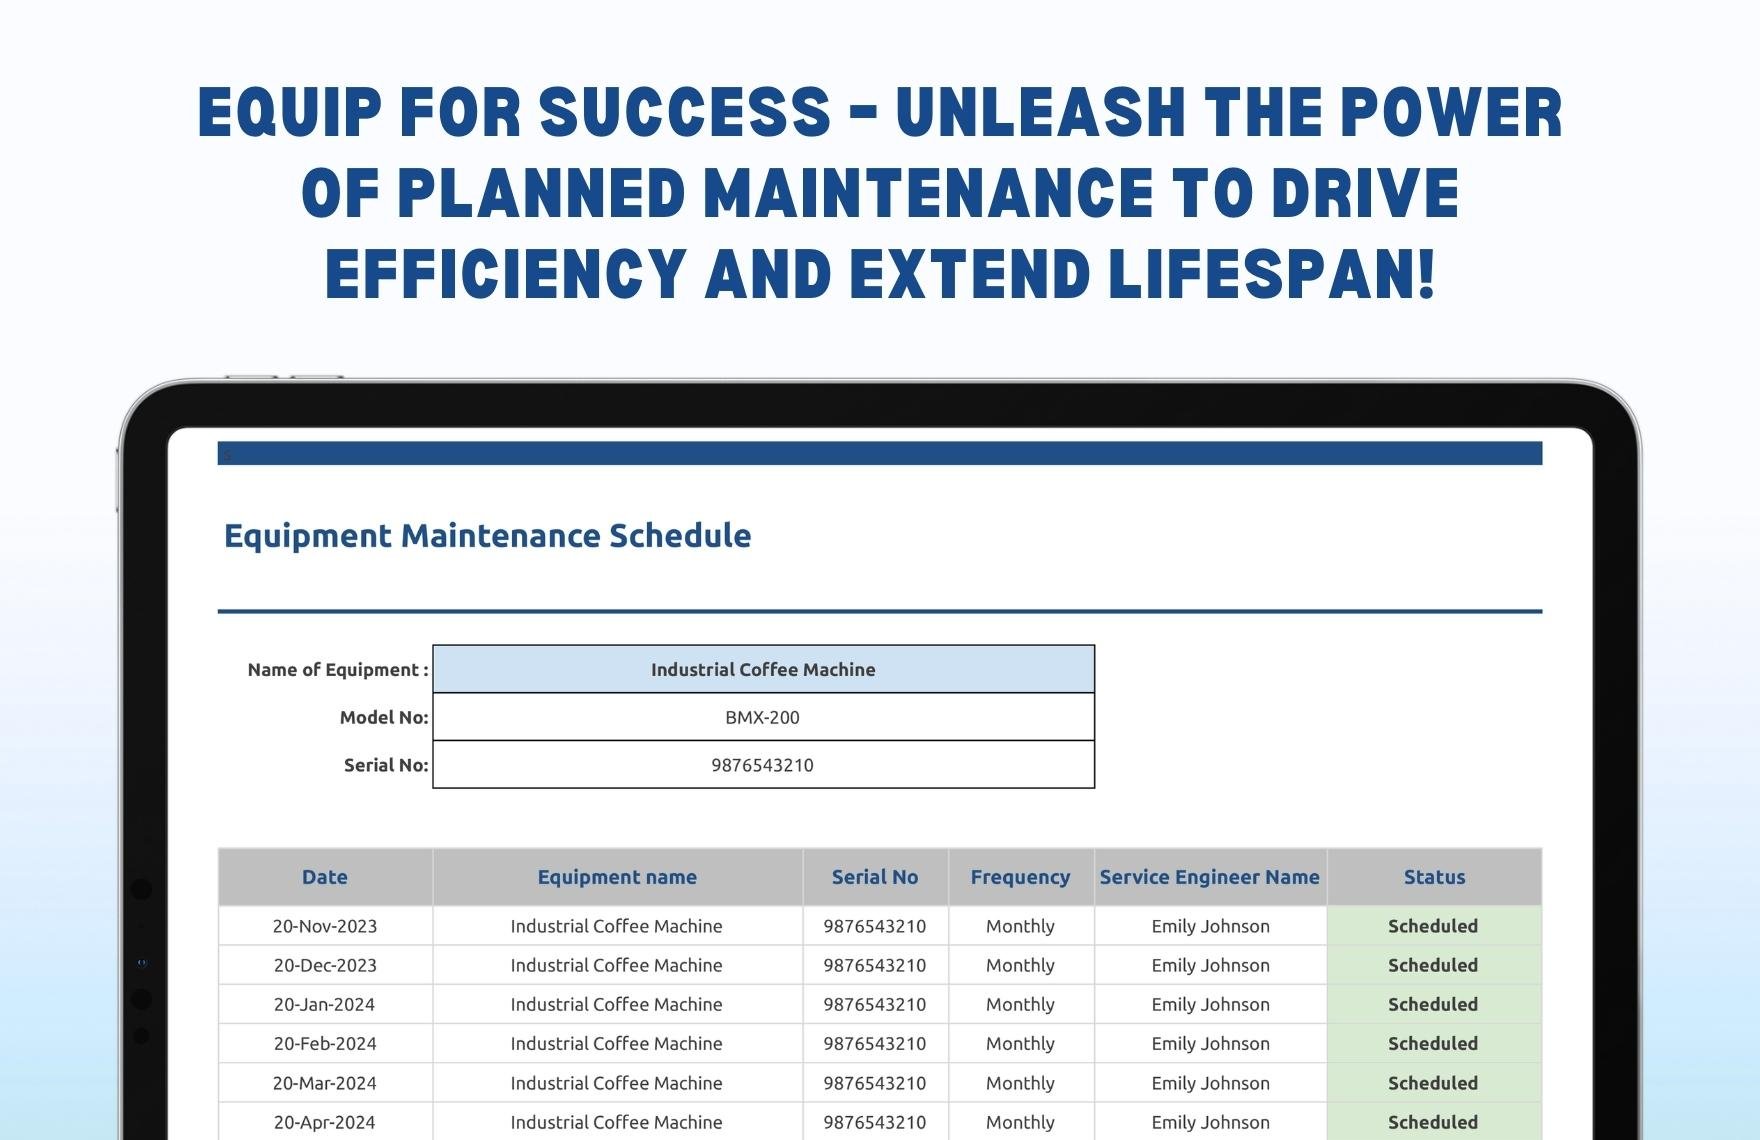 Equipment Maintenance Schedule Template